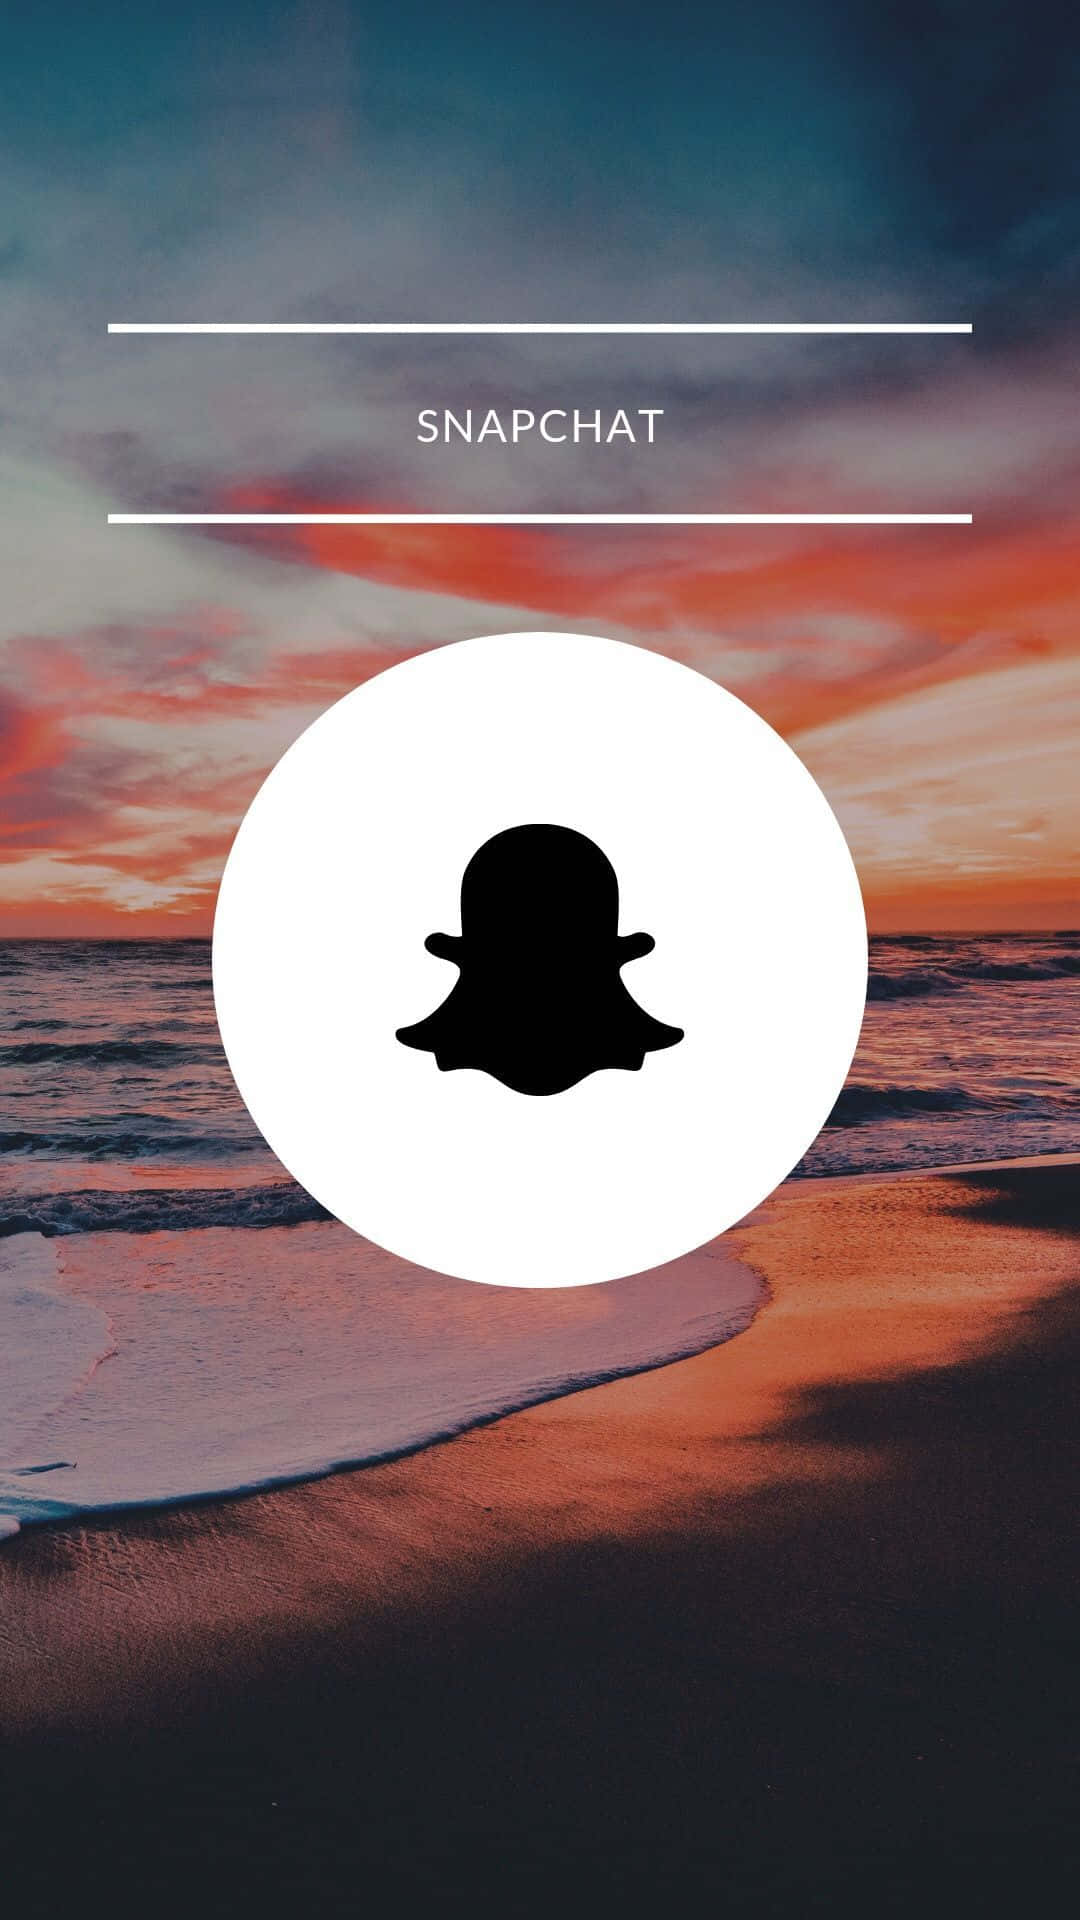 Unleash your creativity on Snapchat